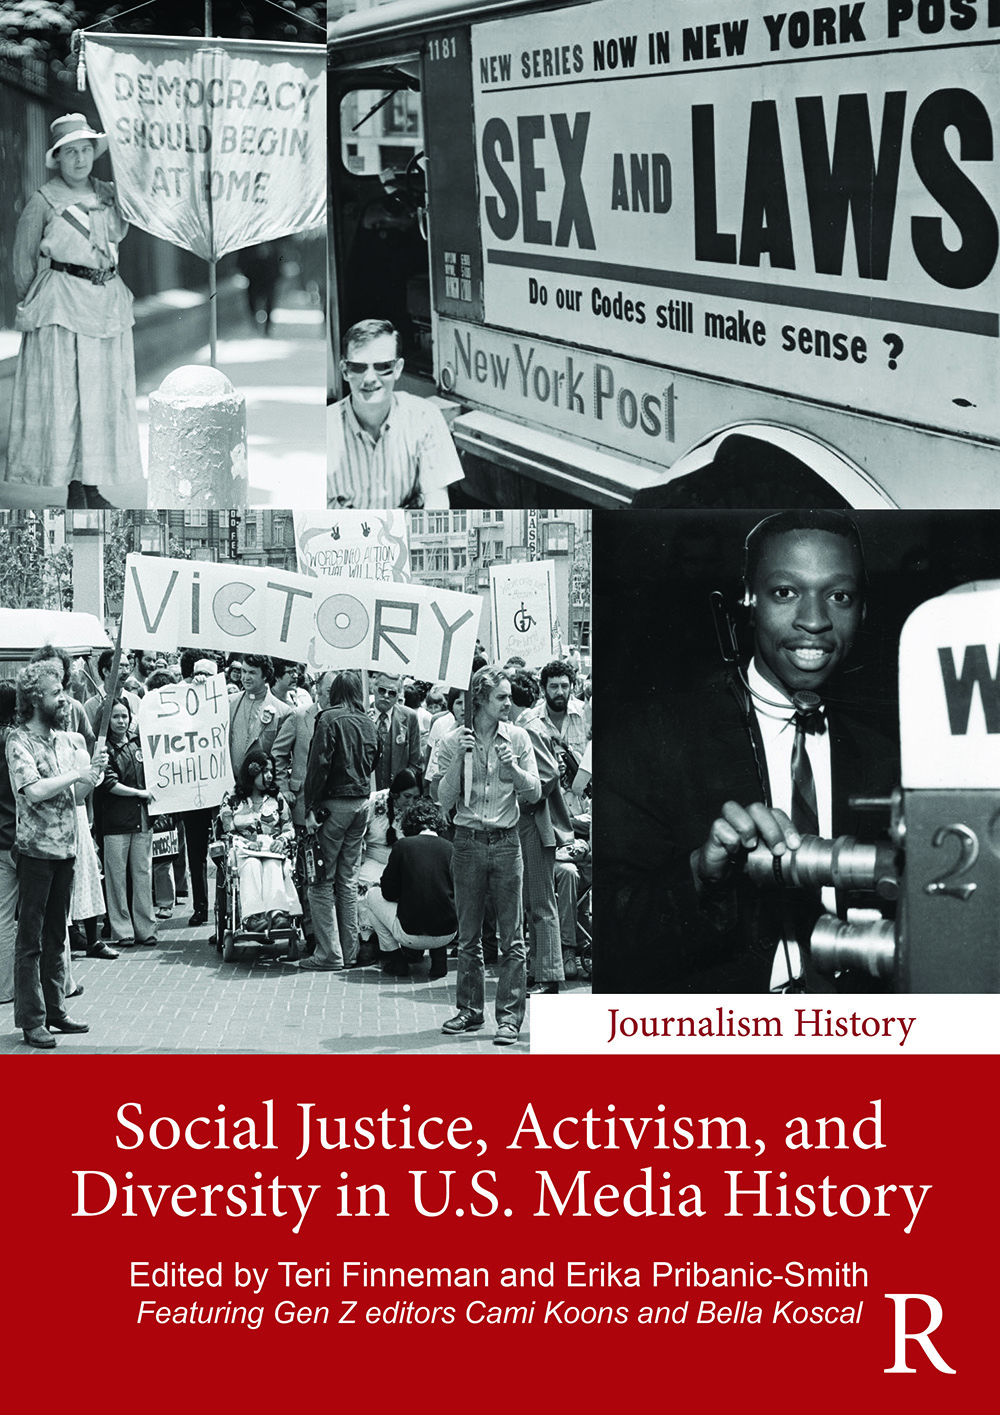 “Social Justice, Activism and Diversity in U.S. Media History,” edited by Teri Finneman